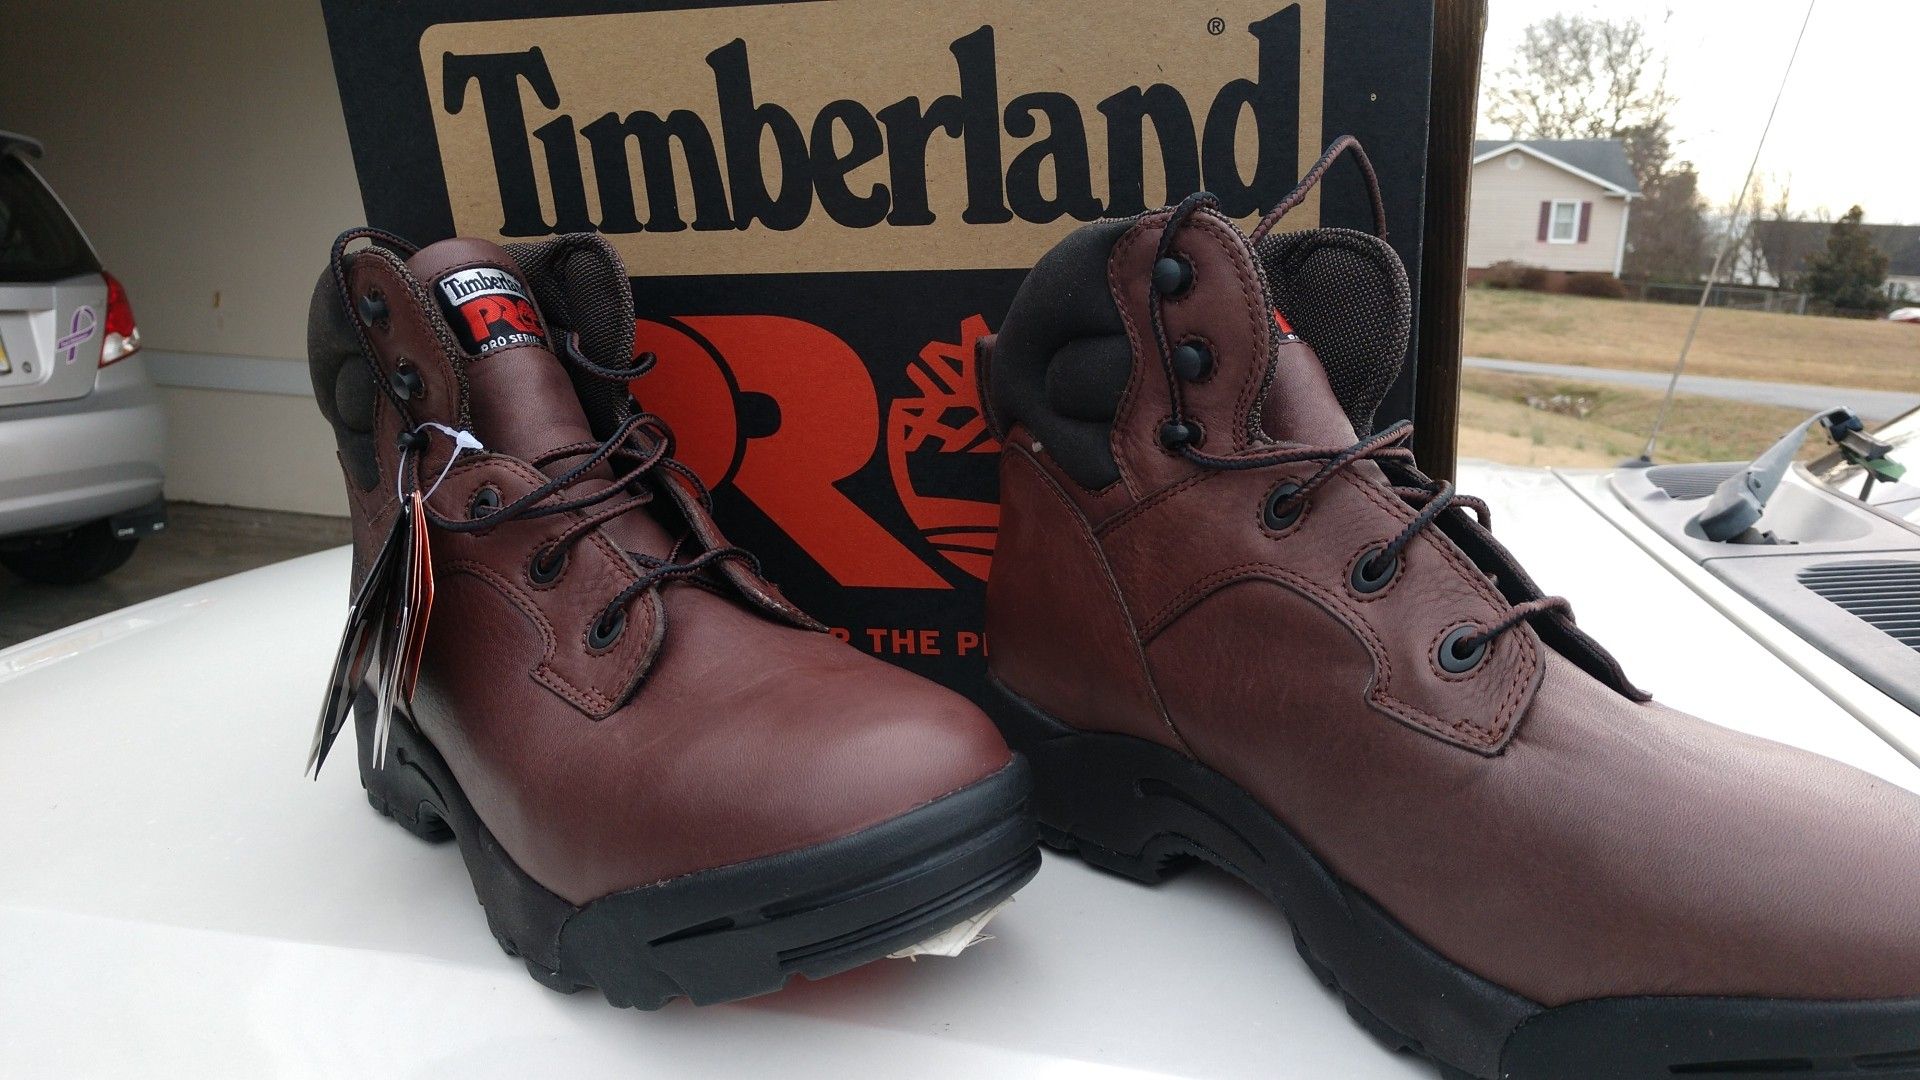 Work Boots - Timberland Steel Toe